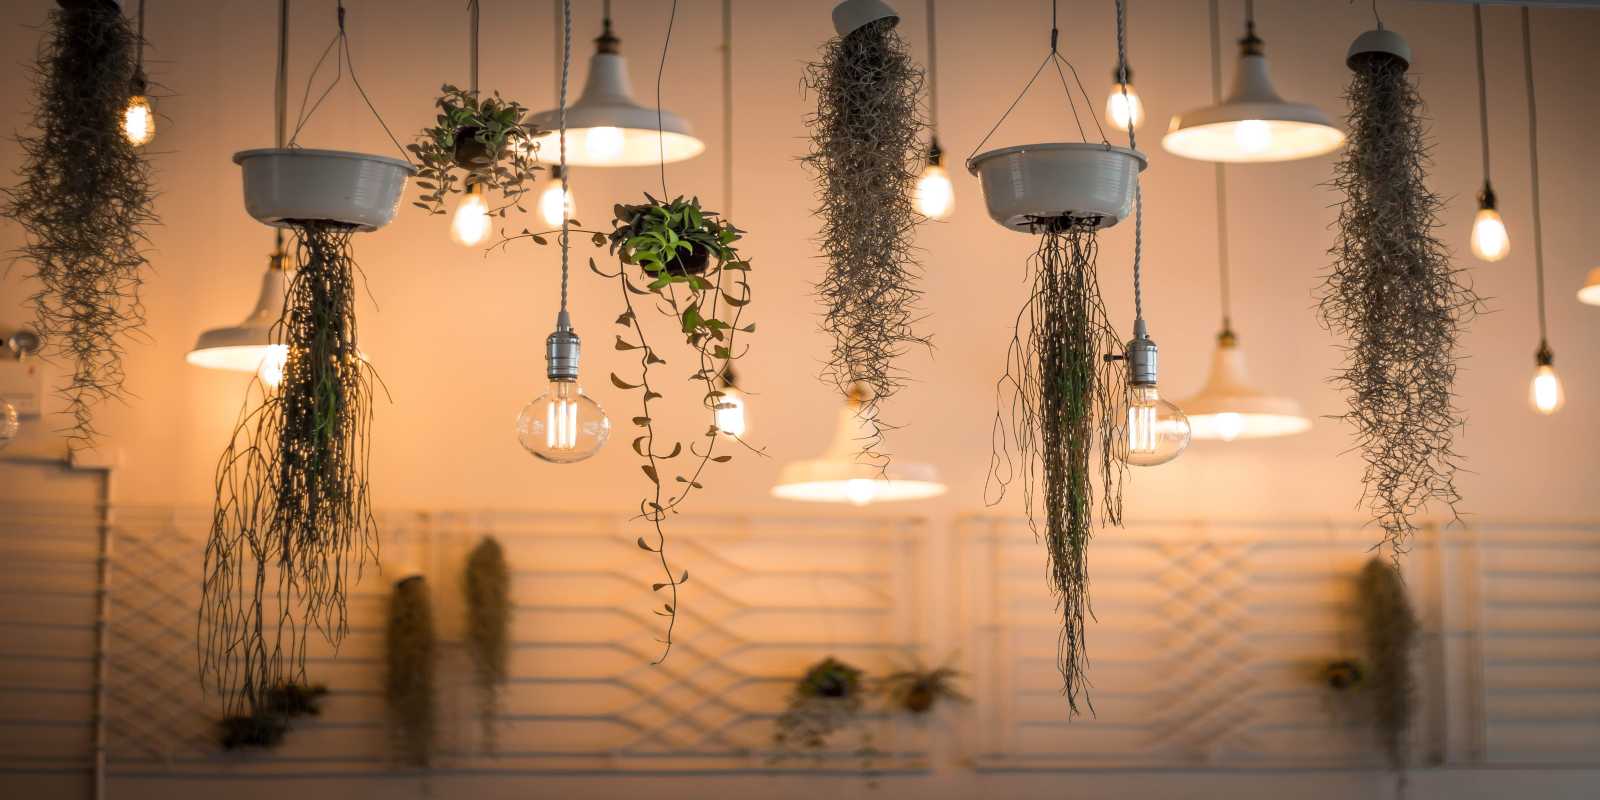 Photo: Lightbulbs and plants (source: Unsplash) 